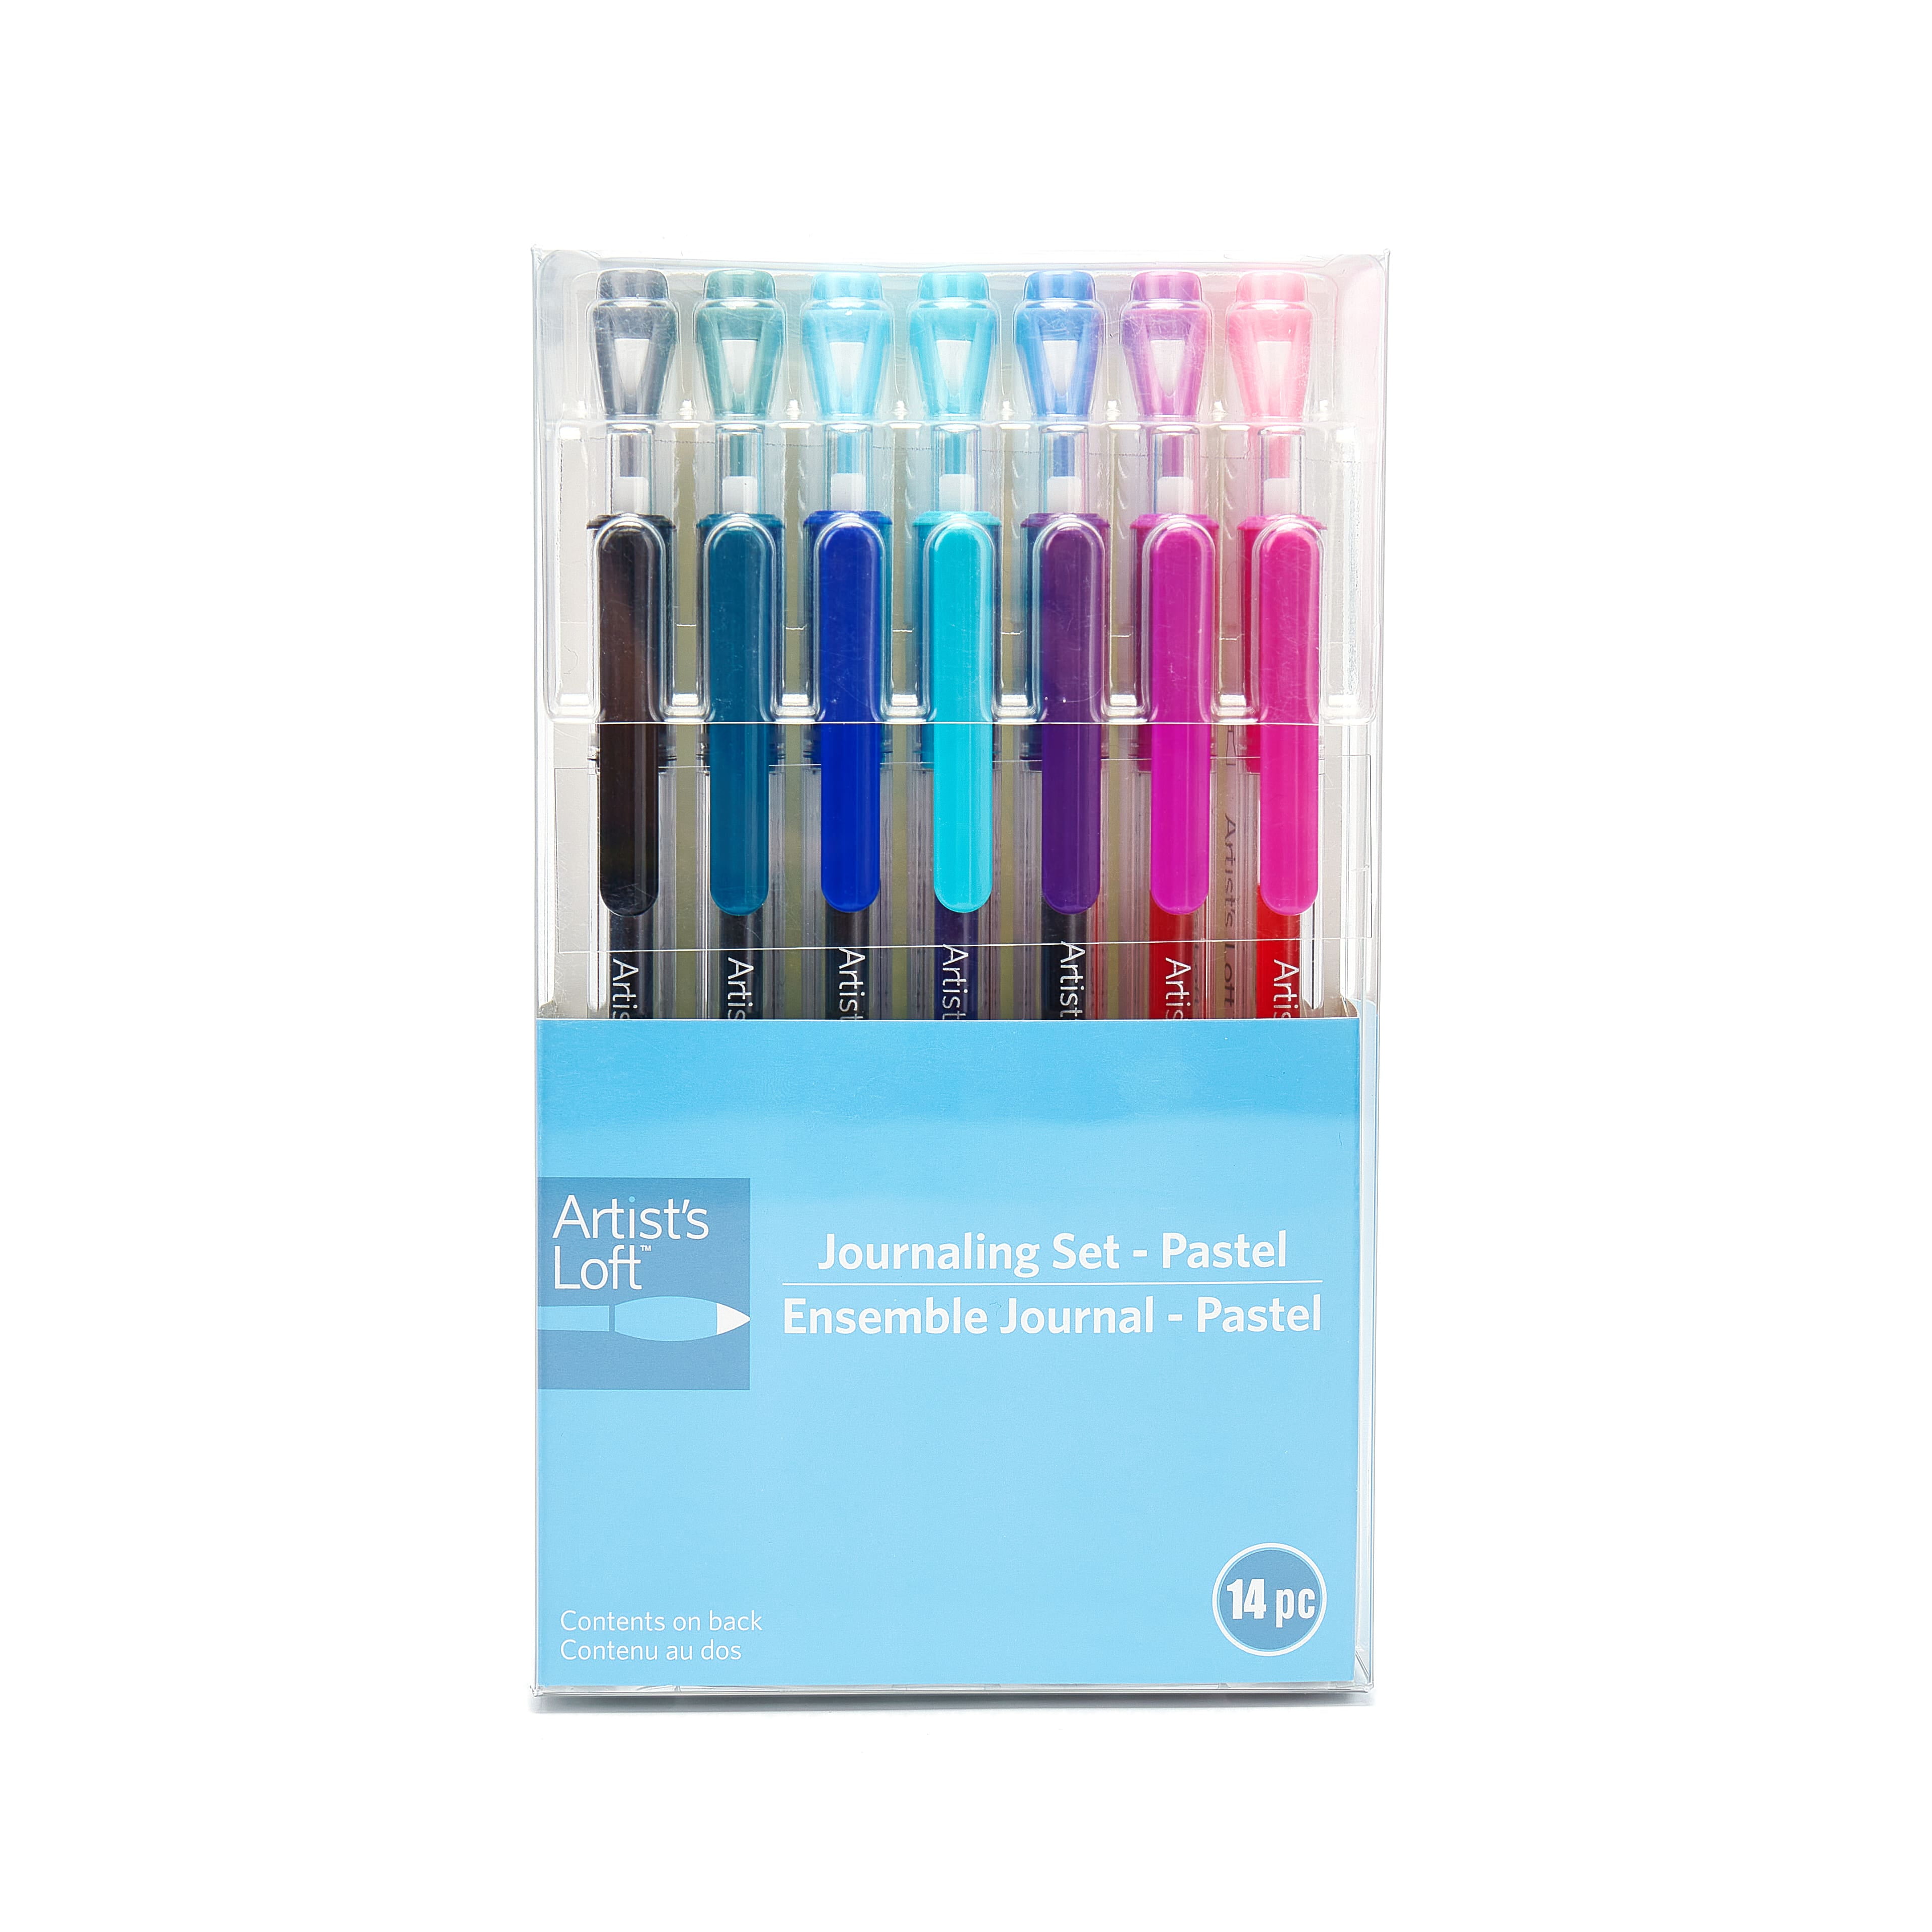 12 Glitter Gel Pens Adult Book Coloring, Bible Studies